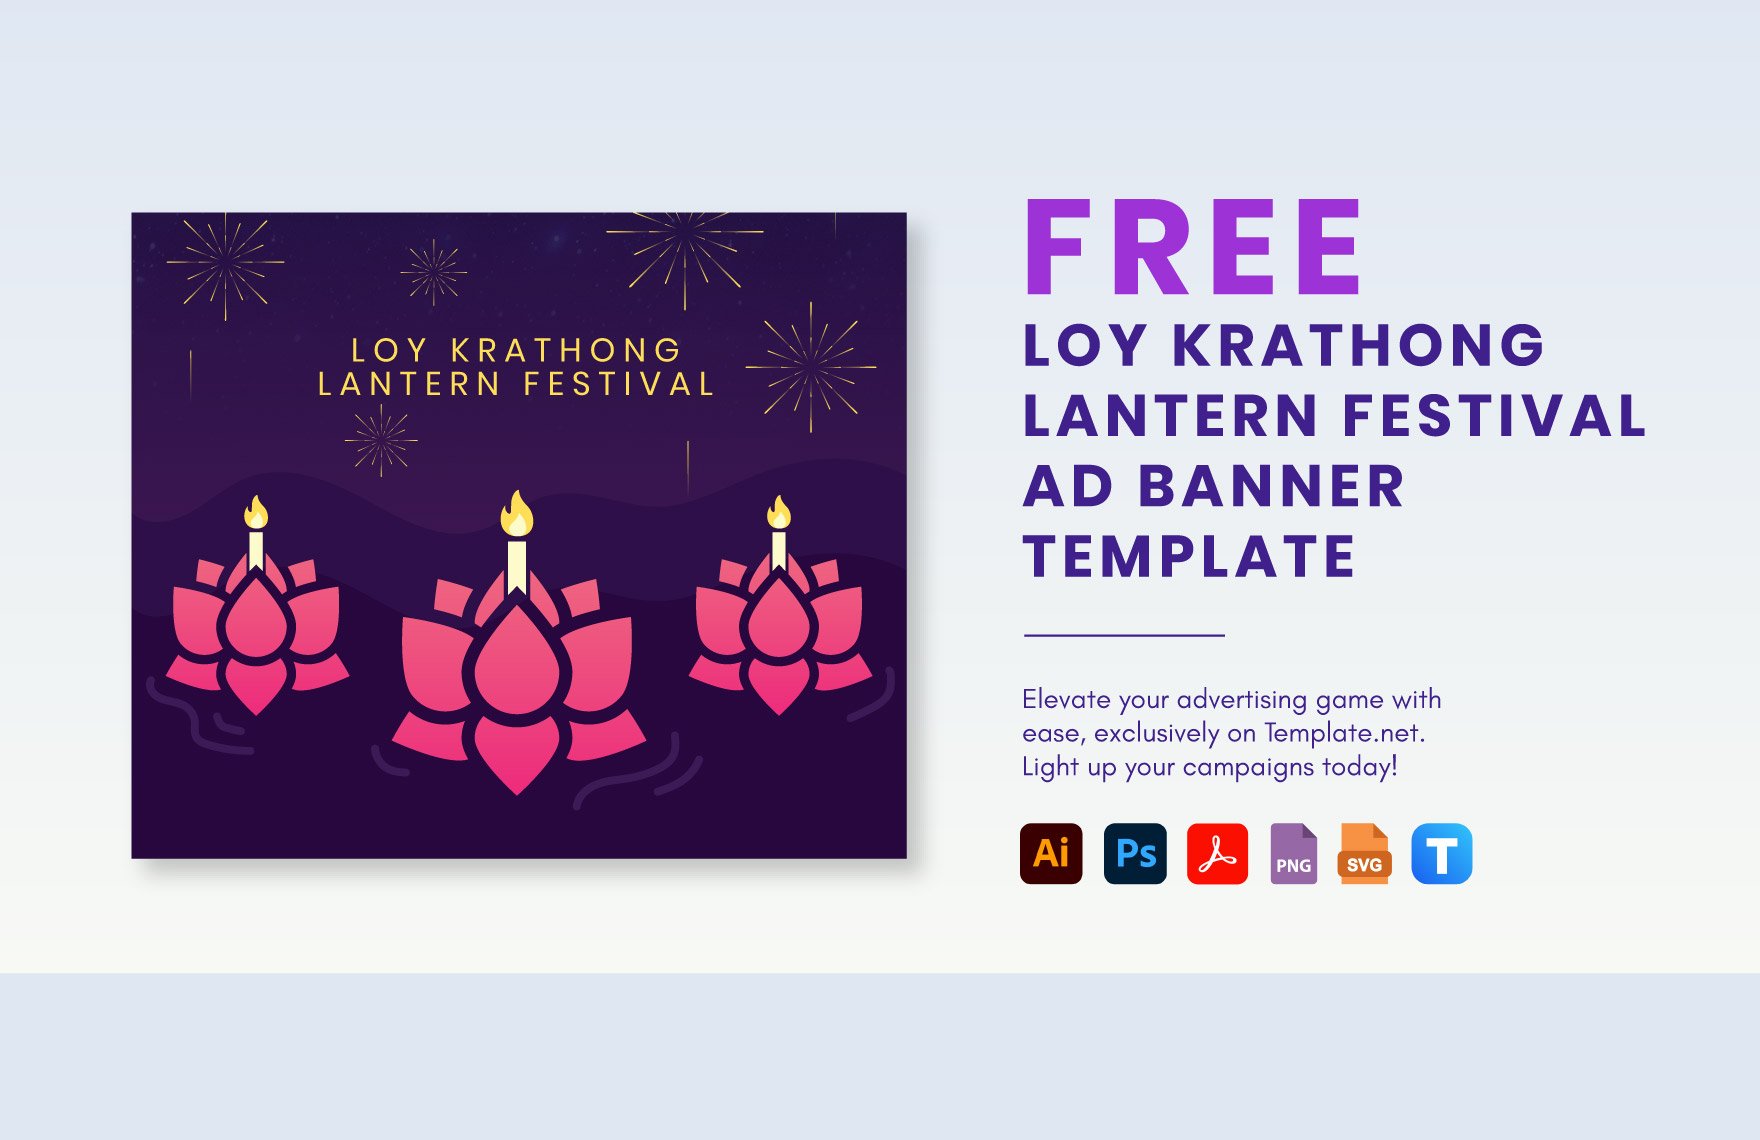 Loy Krathong Lantern Festival Ad Banner Template